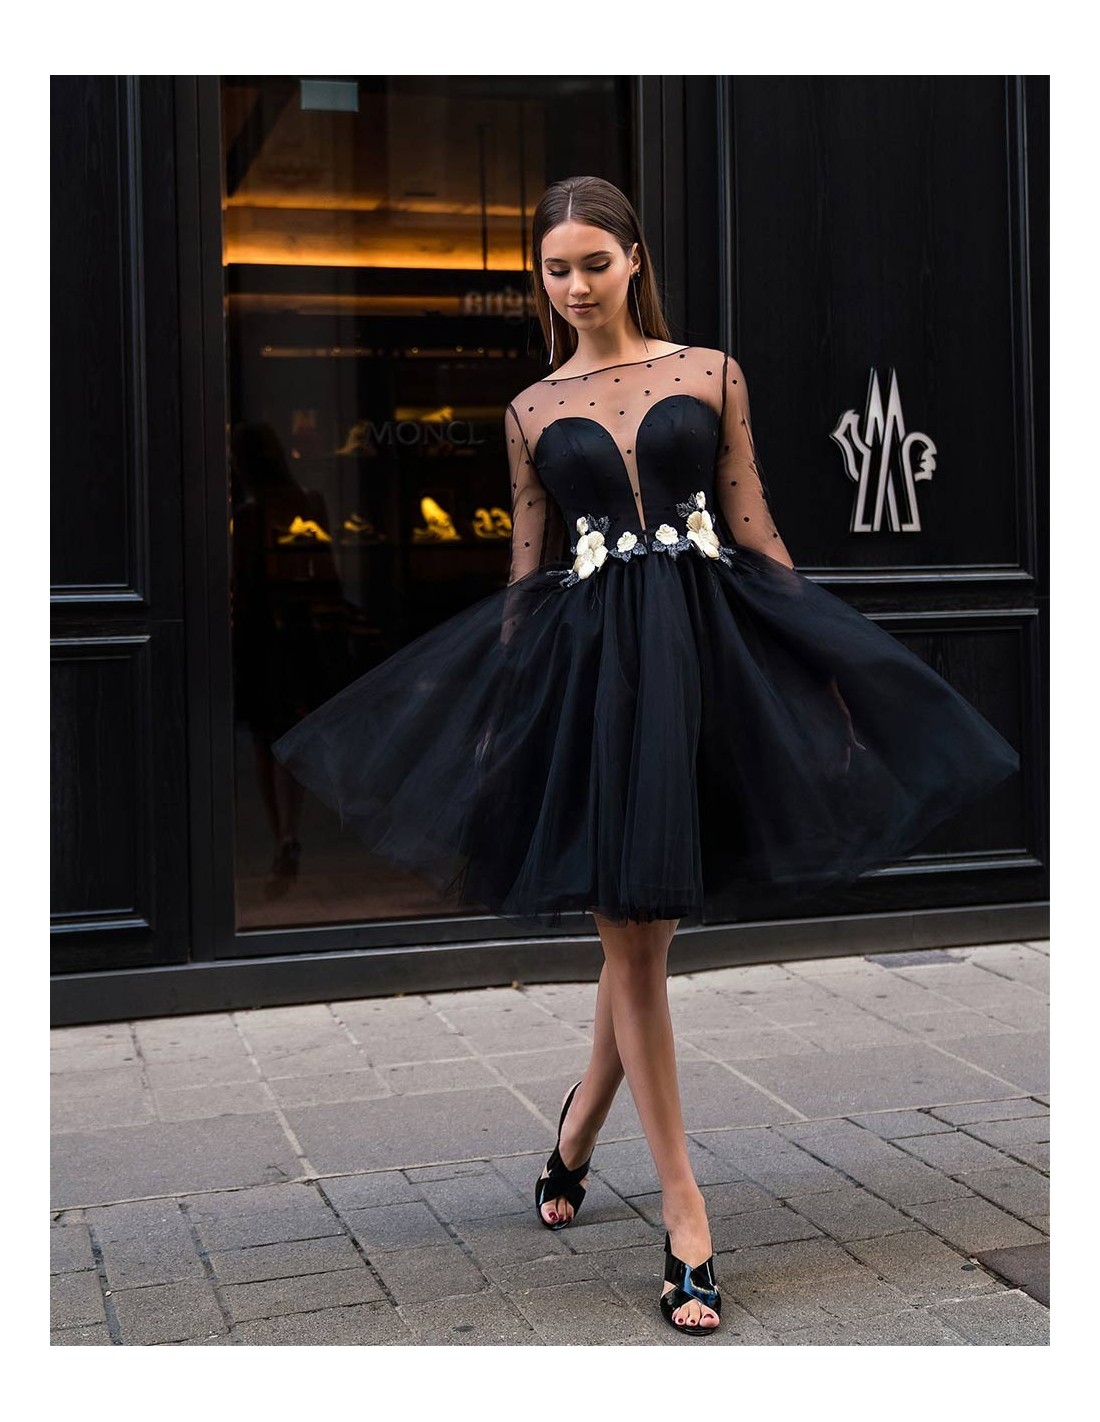 Vestido cóctel negro de tul escote corazón bordado |INVITADISIMA